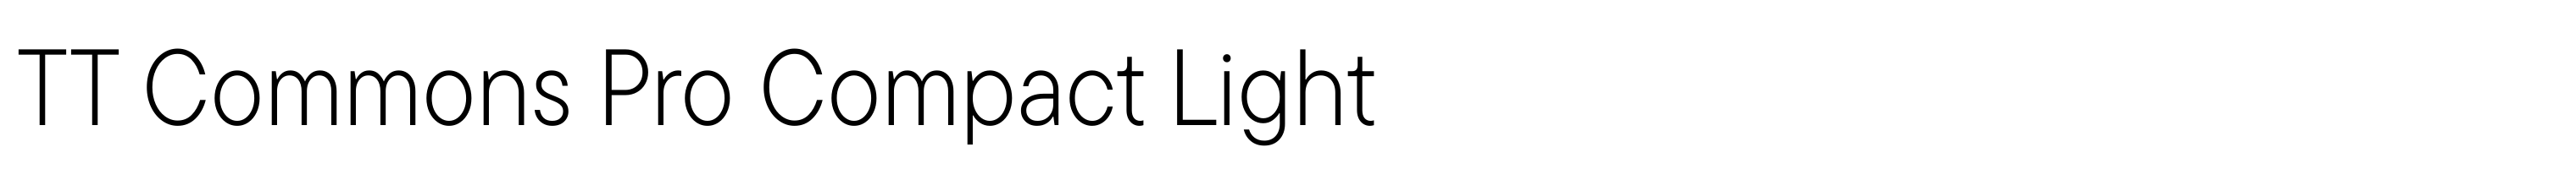 TT Commons Pro Compact Light